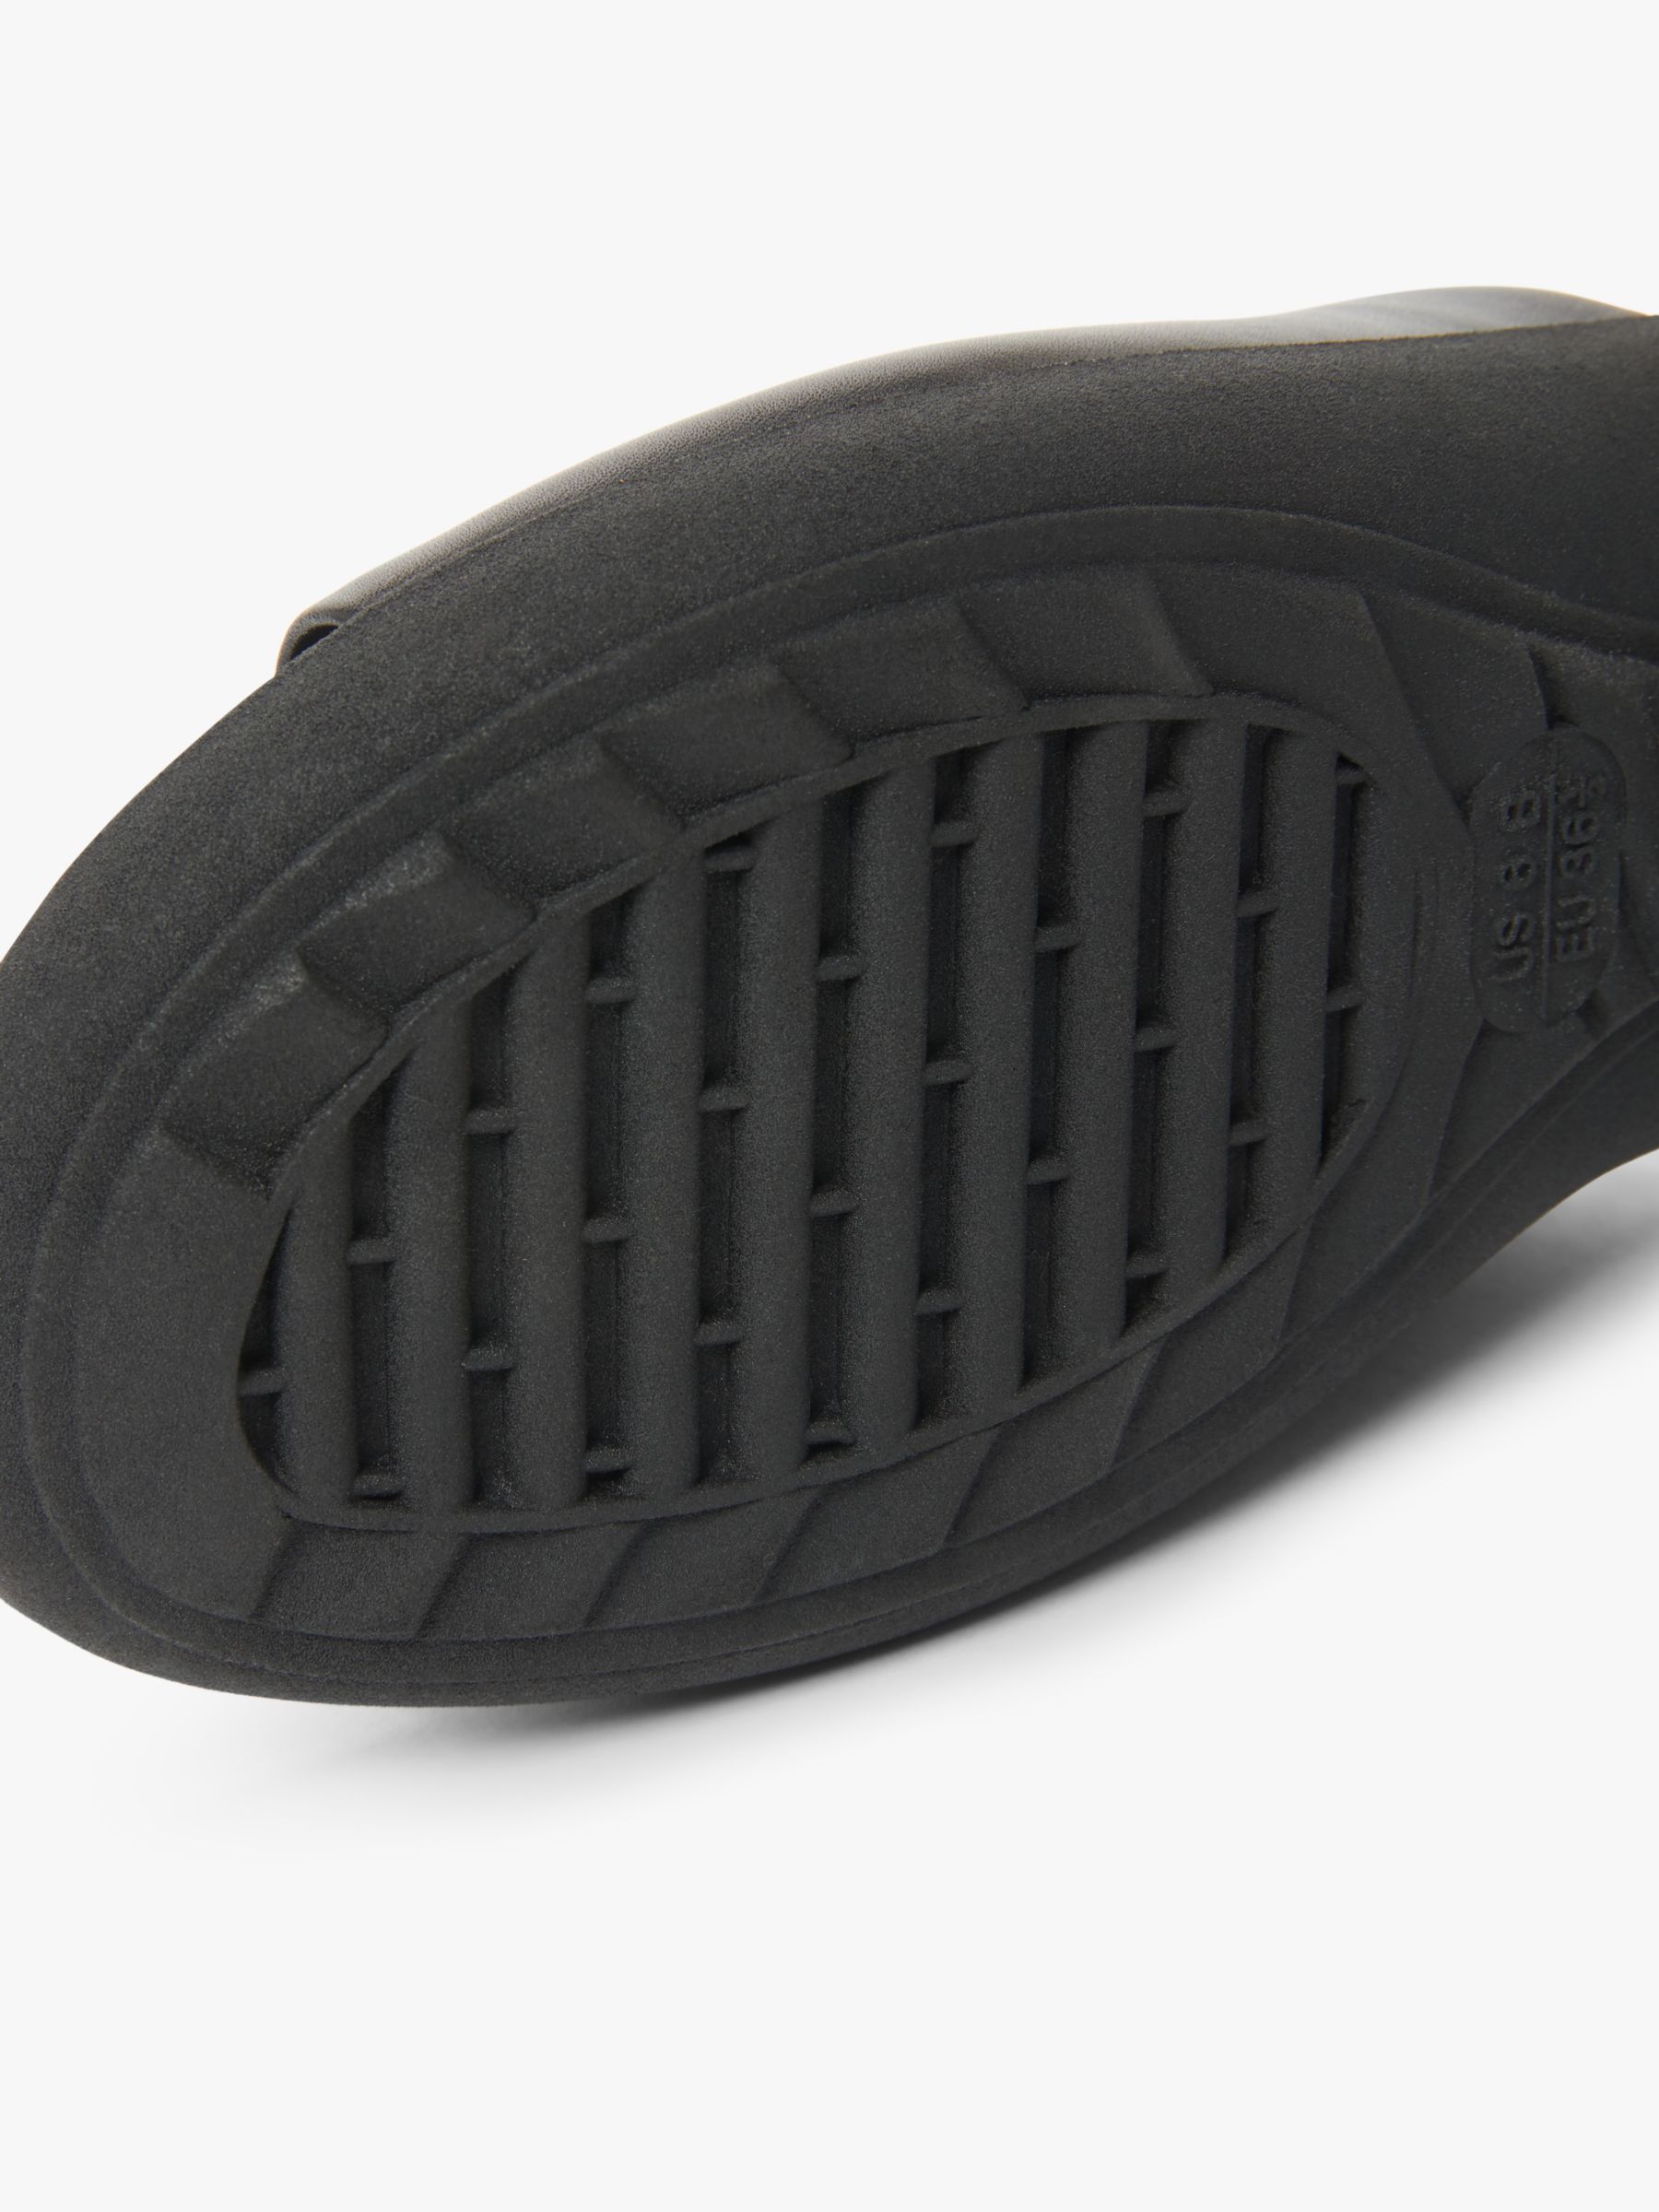 John Lewis & Partners Designed for Comfort Kathy Leather Wedge Heel ...